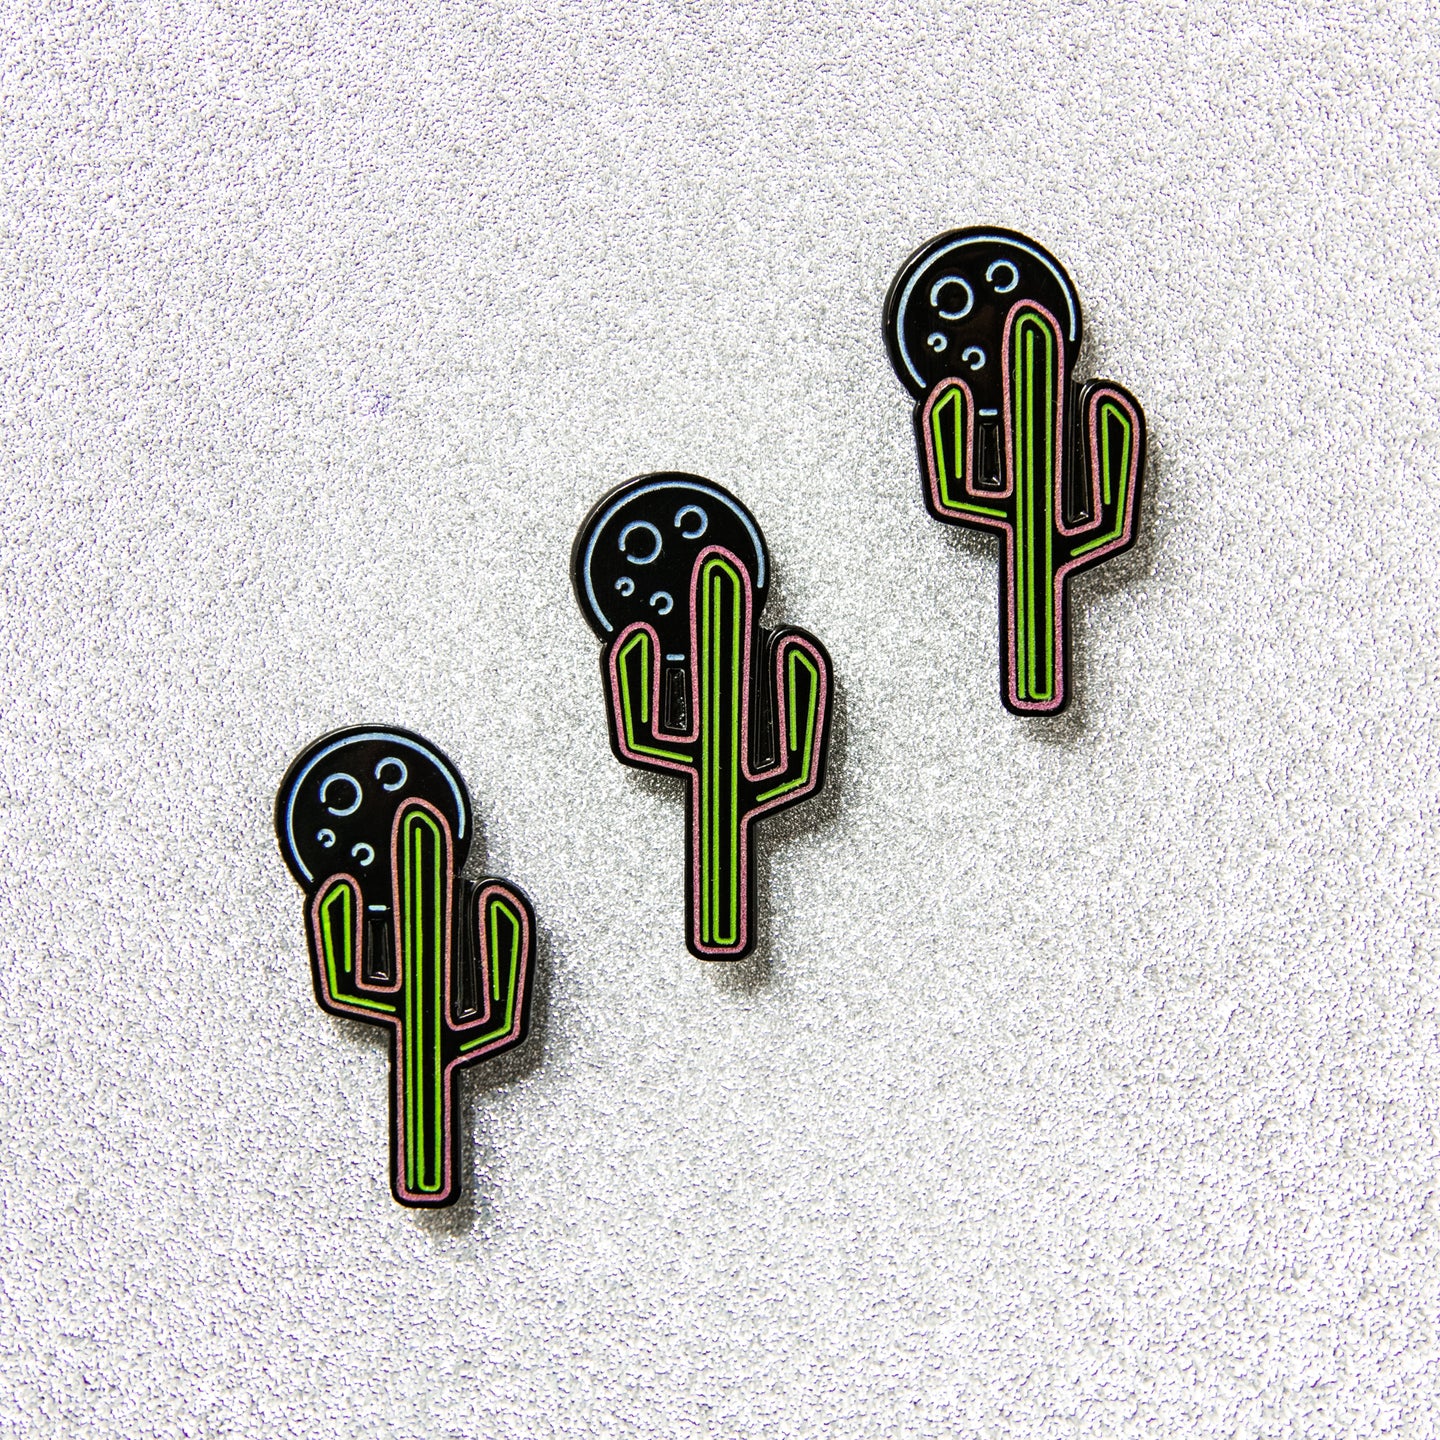 SALE - Cactus Moon Enamel Pin (glows in the dark!)